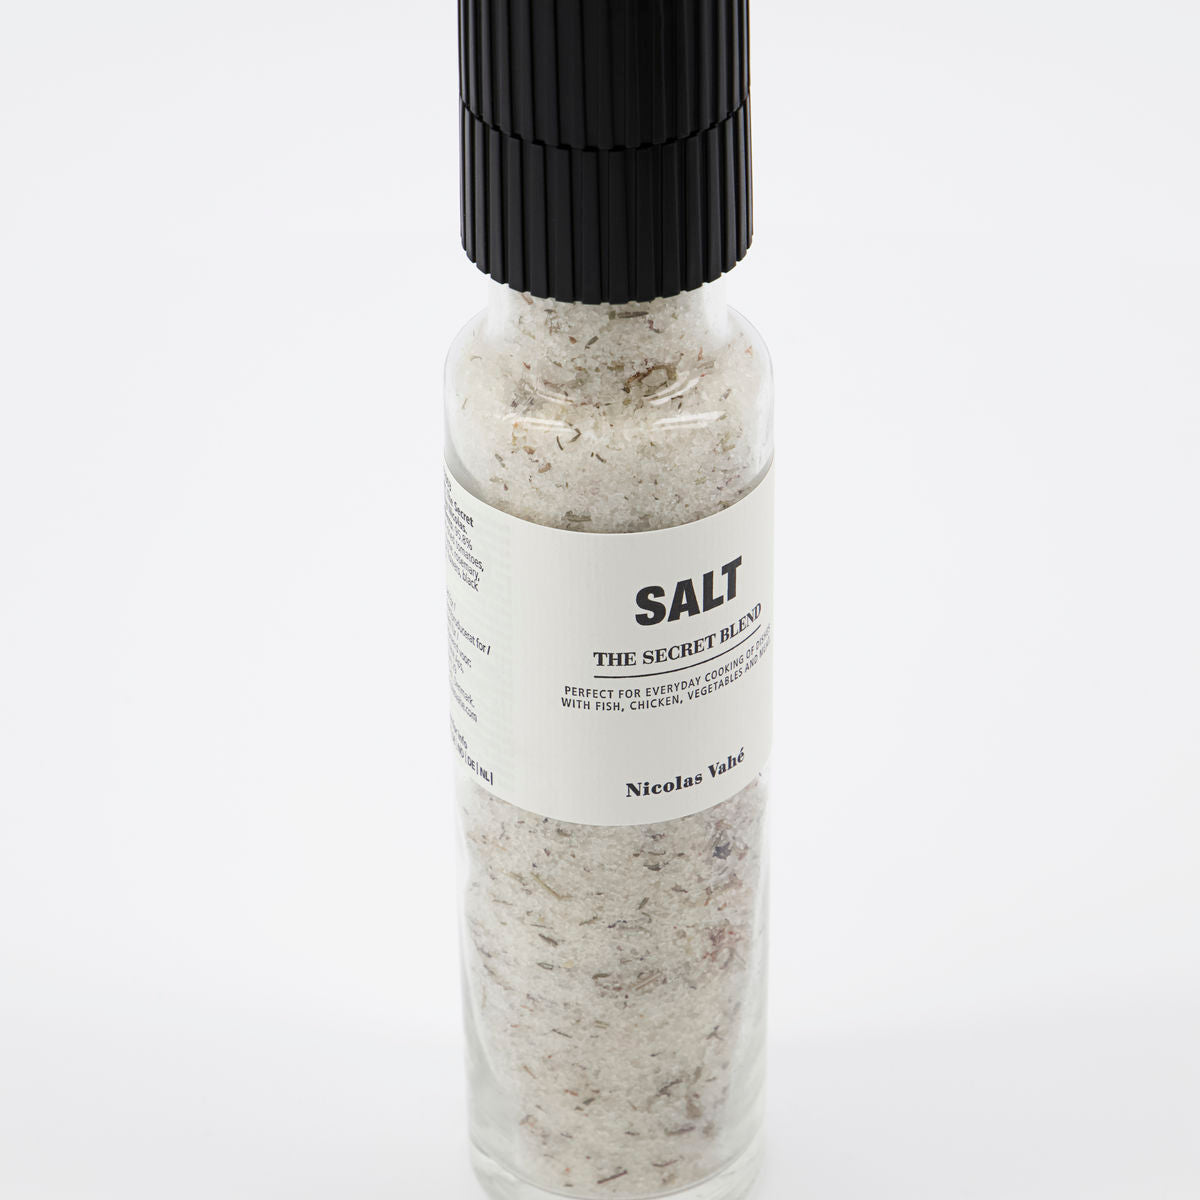 Salt secret Blend Nicolas Vahe